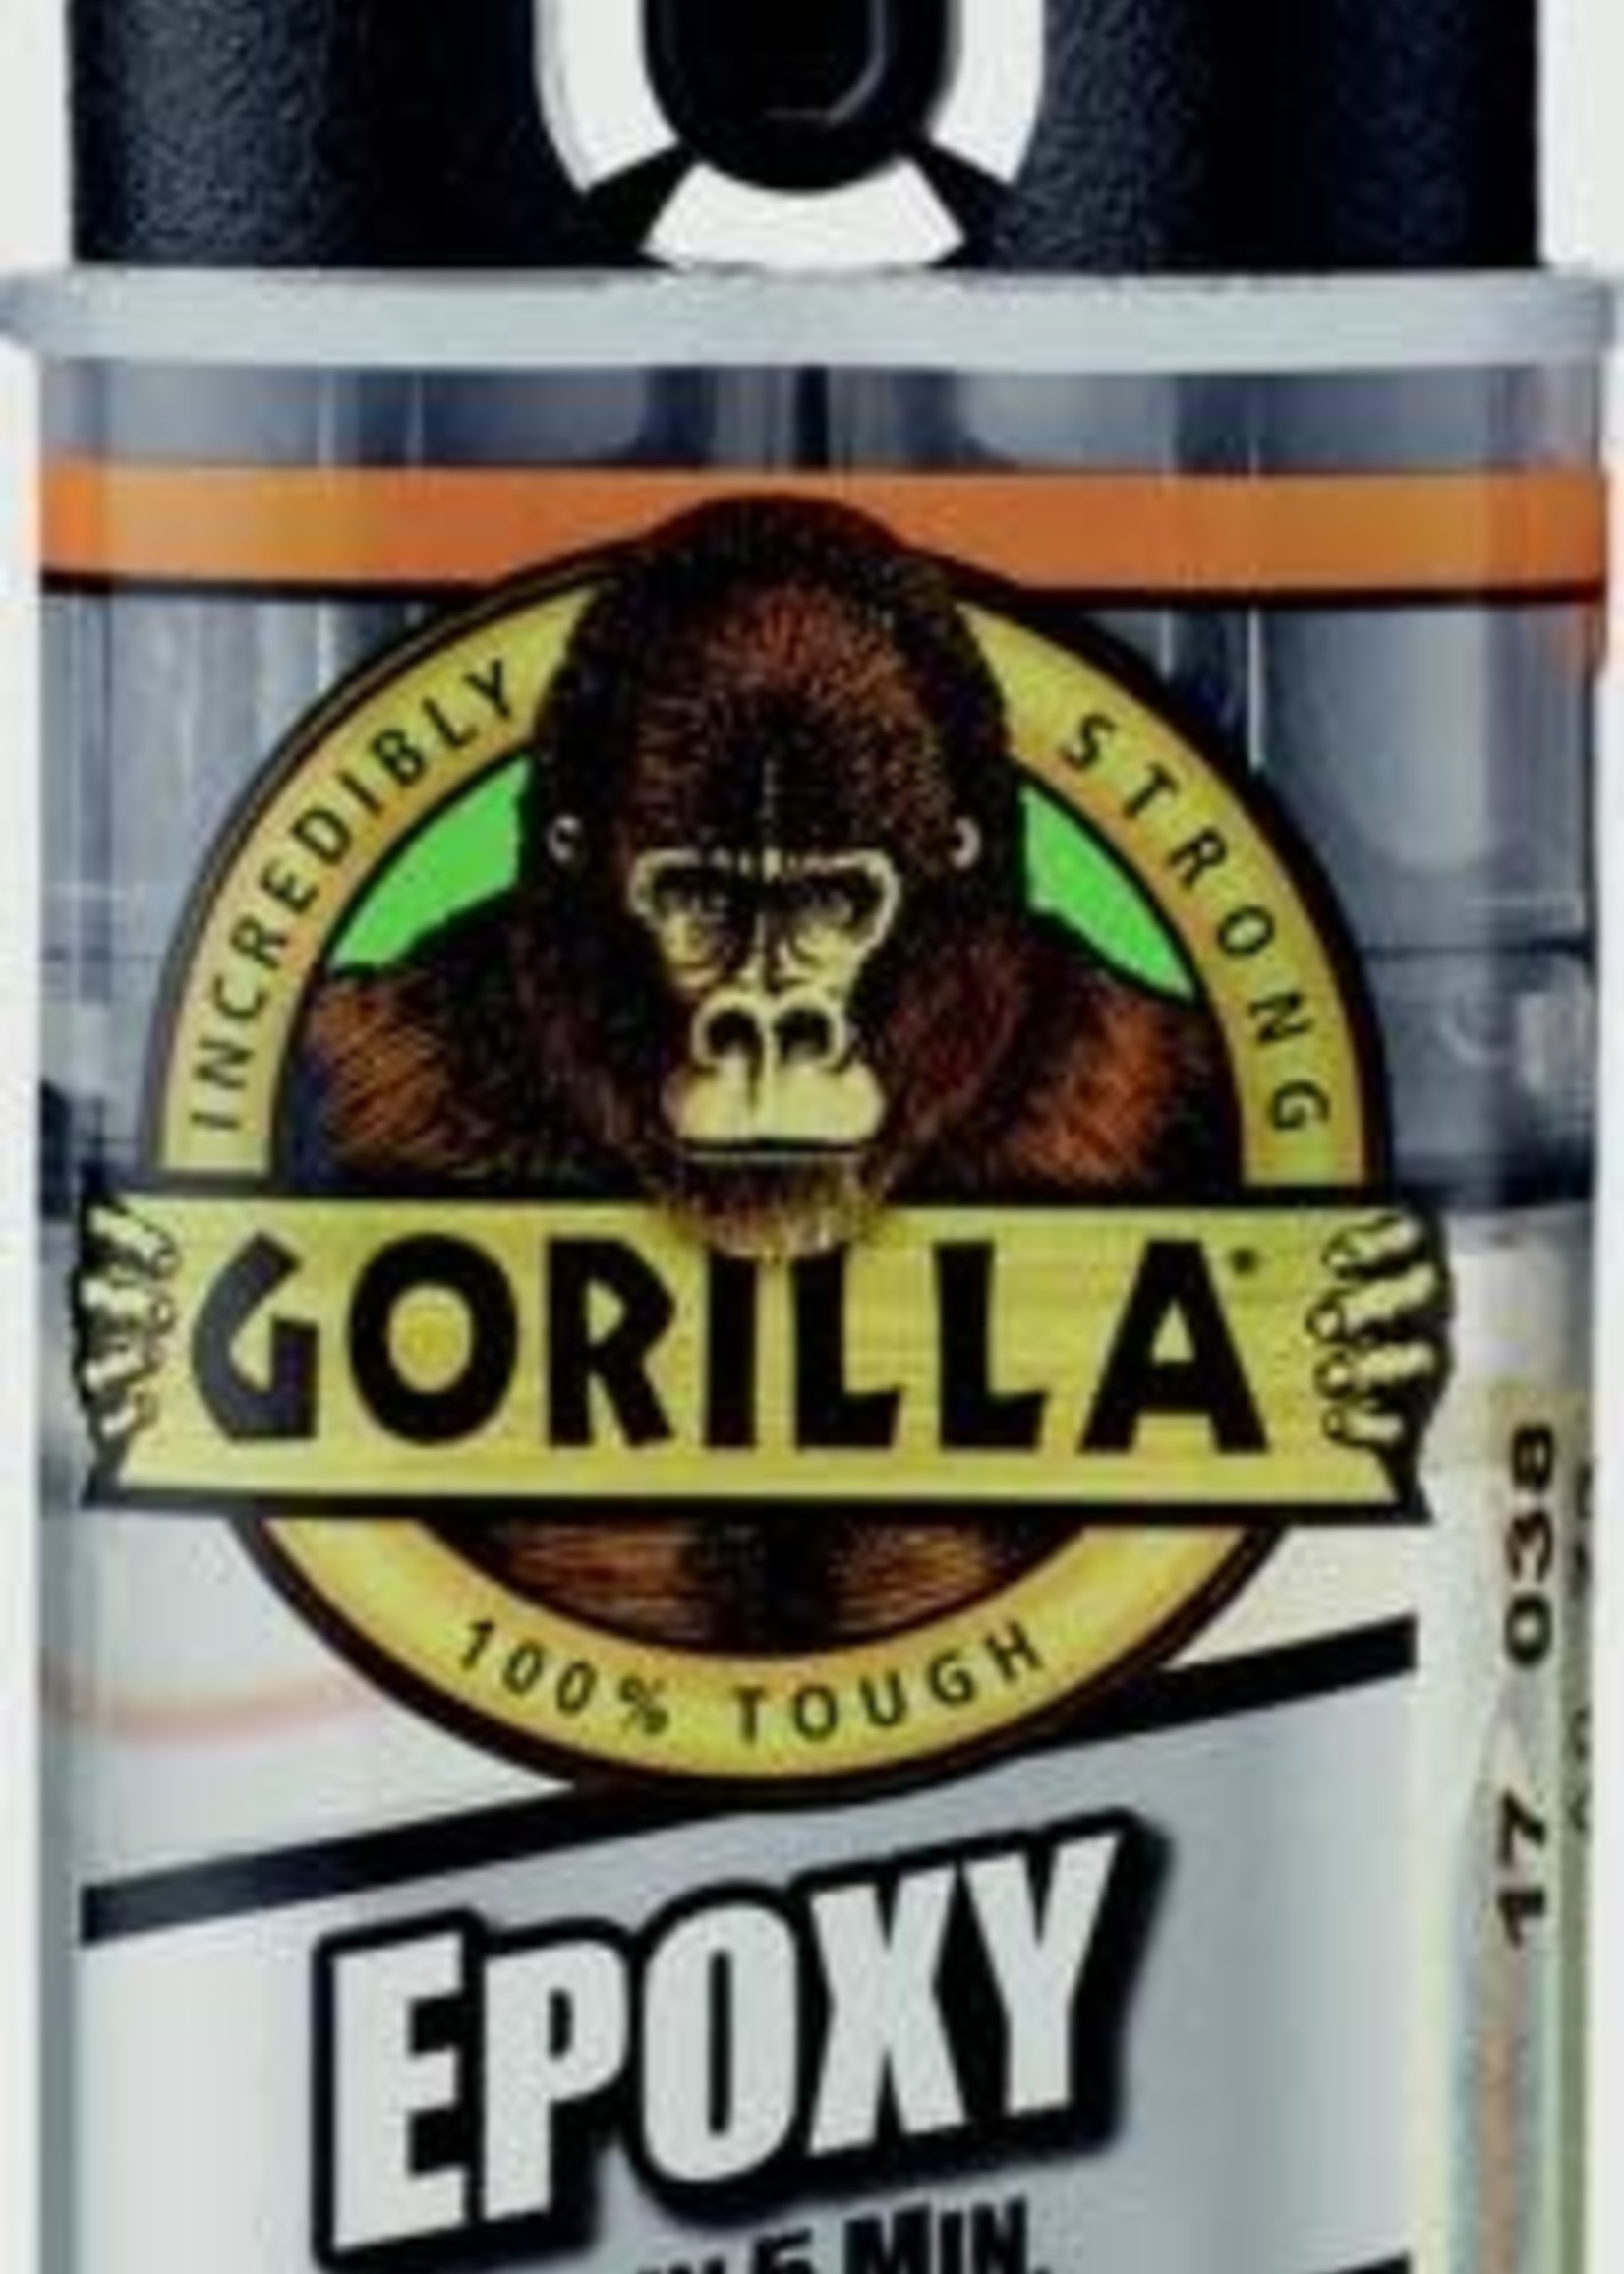 Gorilla Gorilla Gorilla Epoxy 25ml